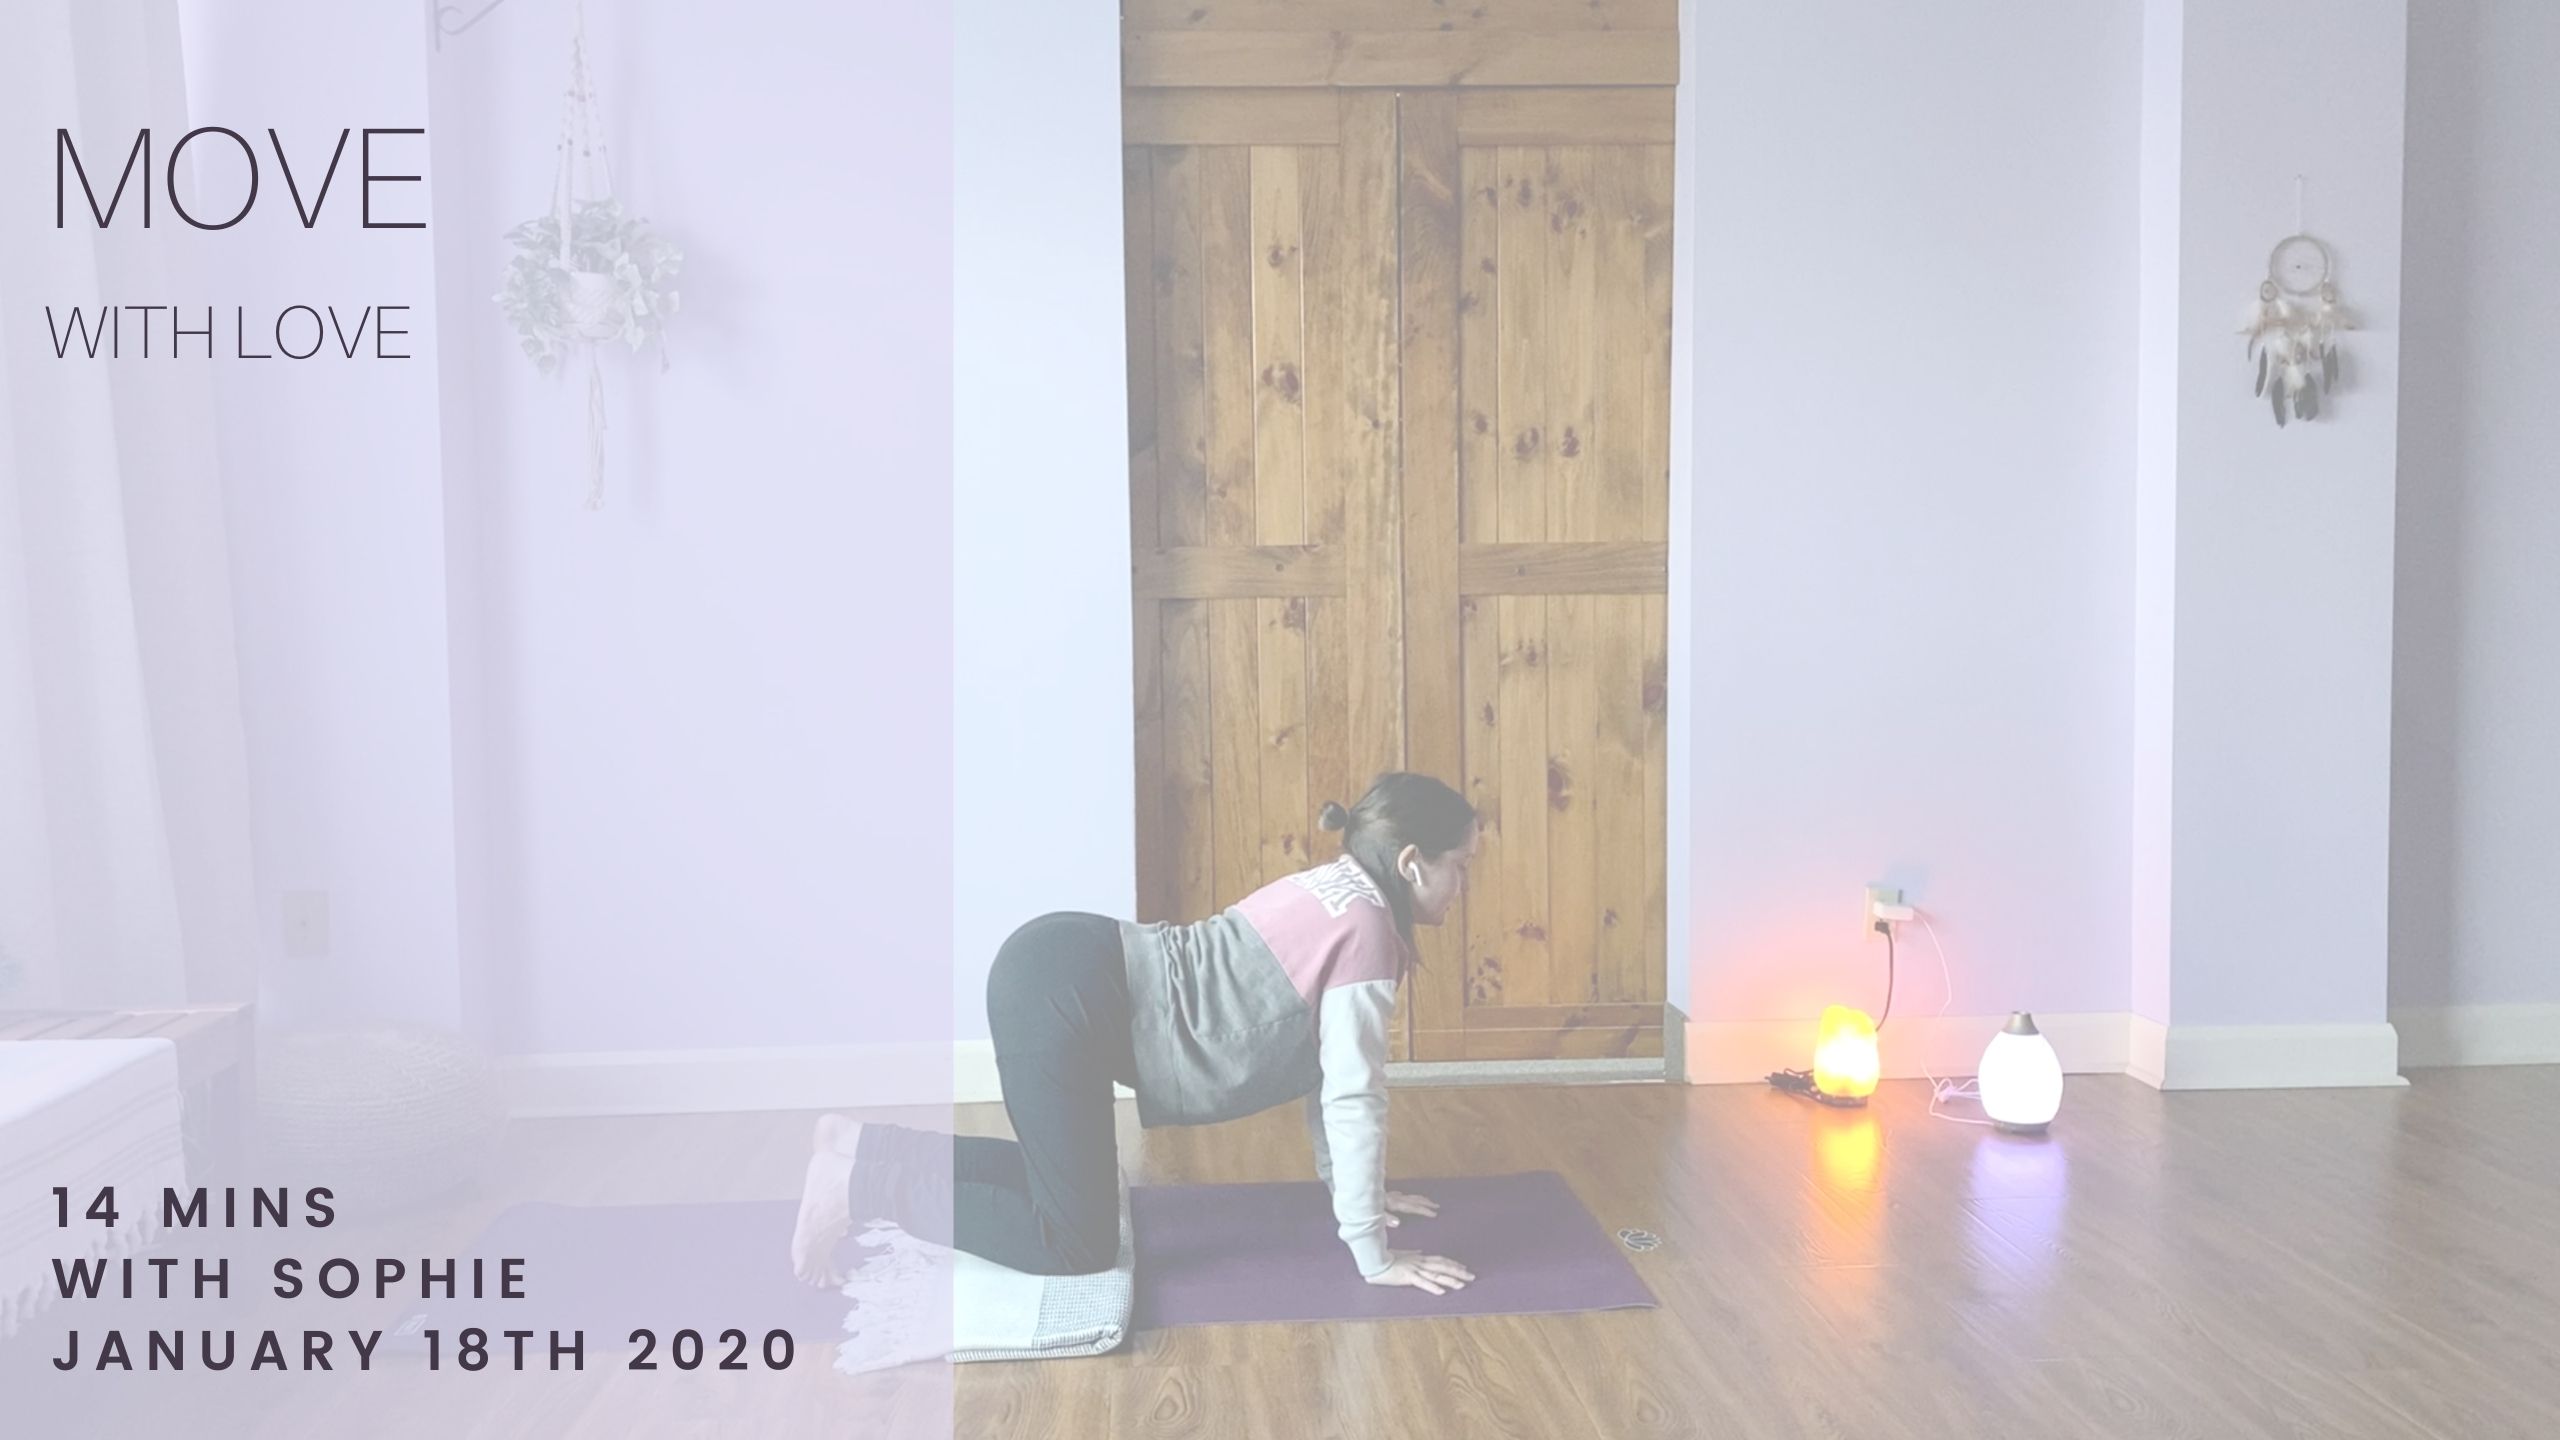 Yoga For Seniors, 14 Minute DVD Preview